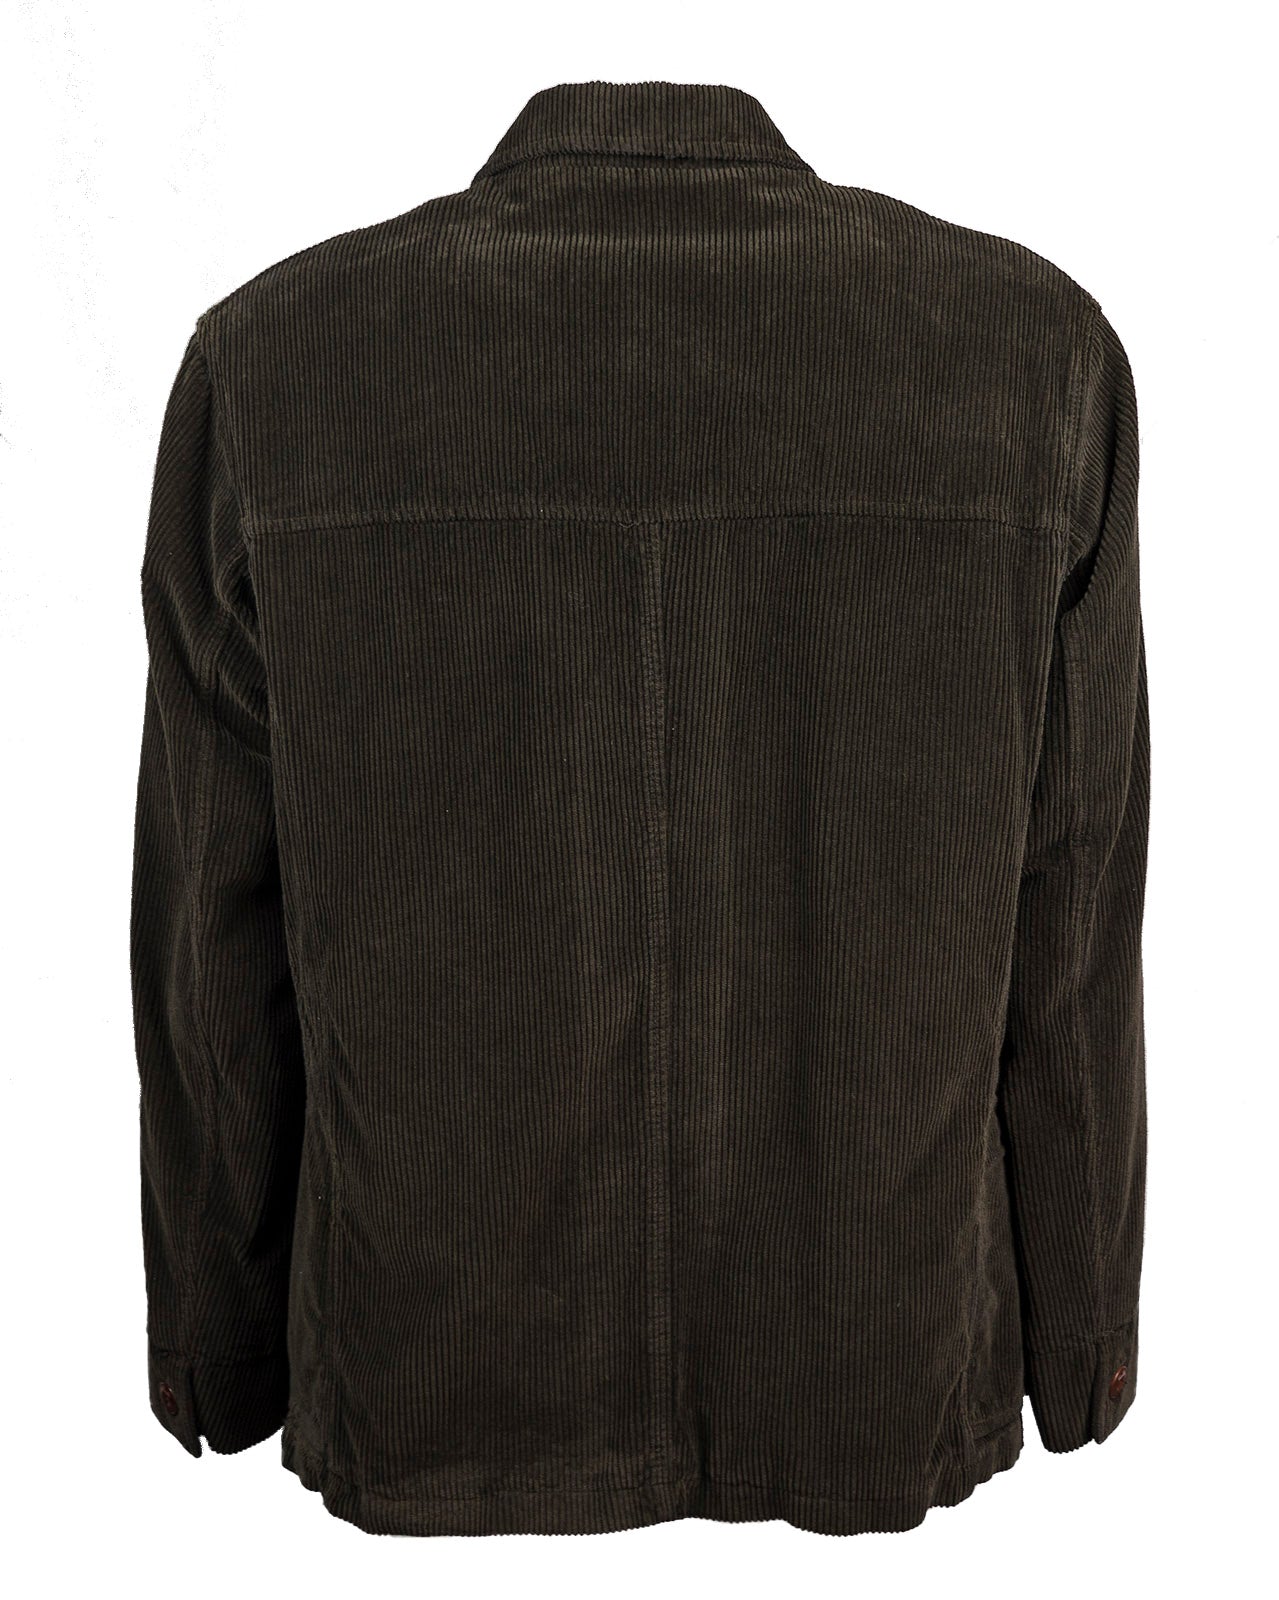 Iconic 500-line velvet jacket